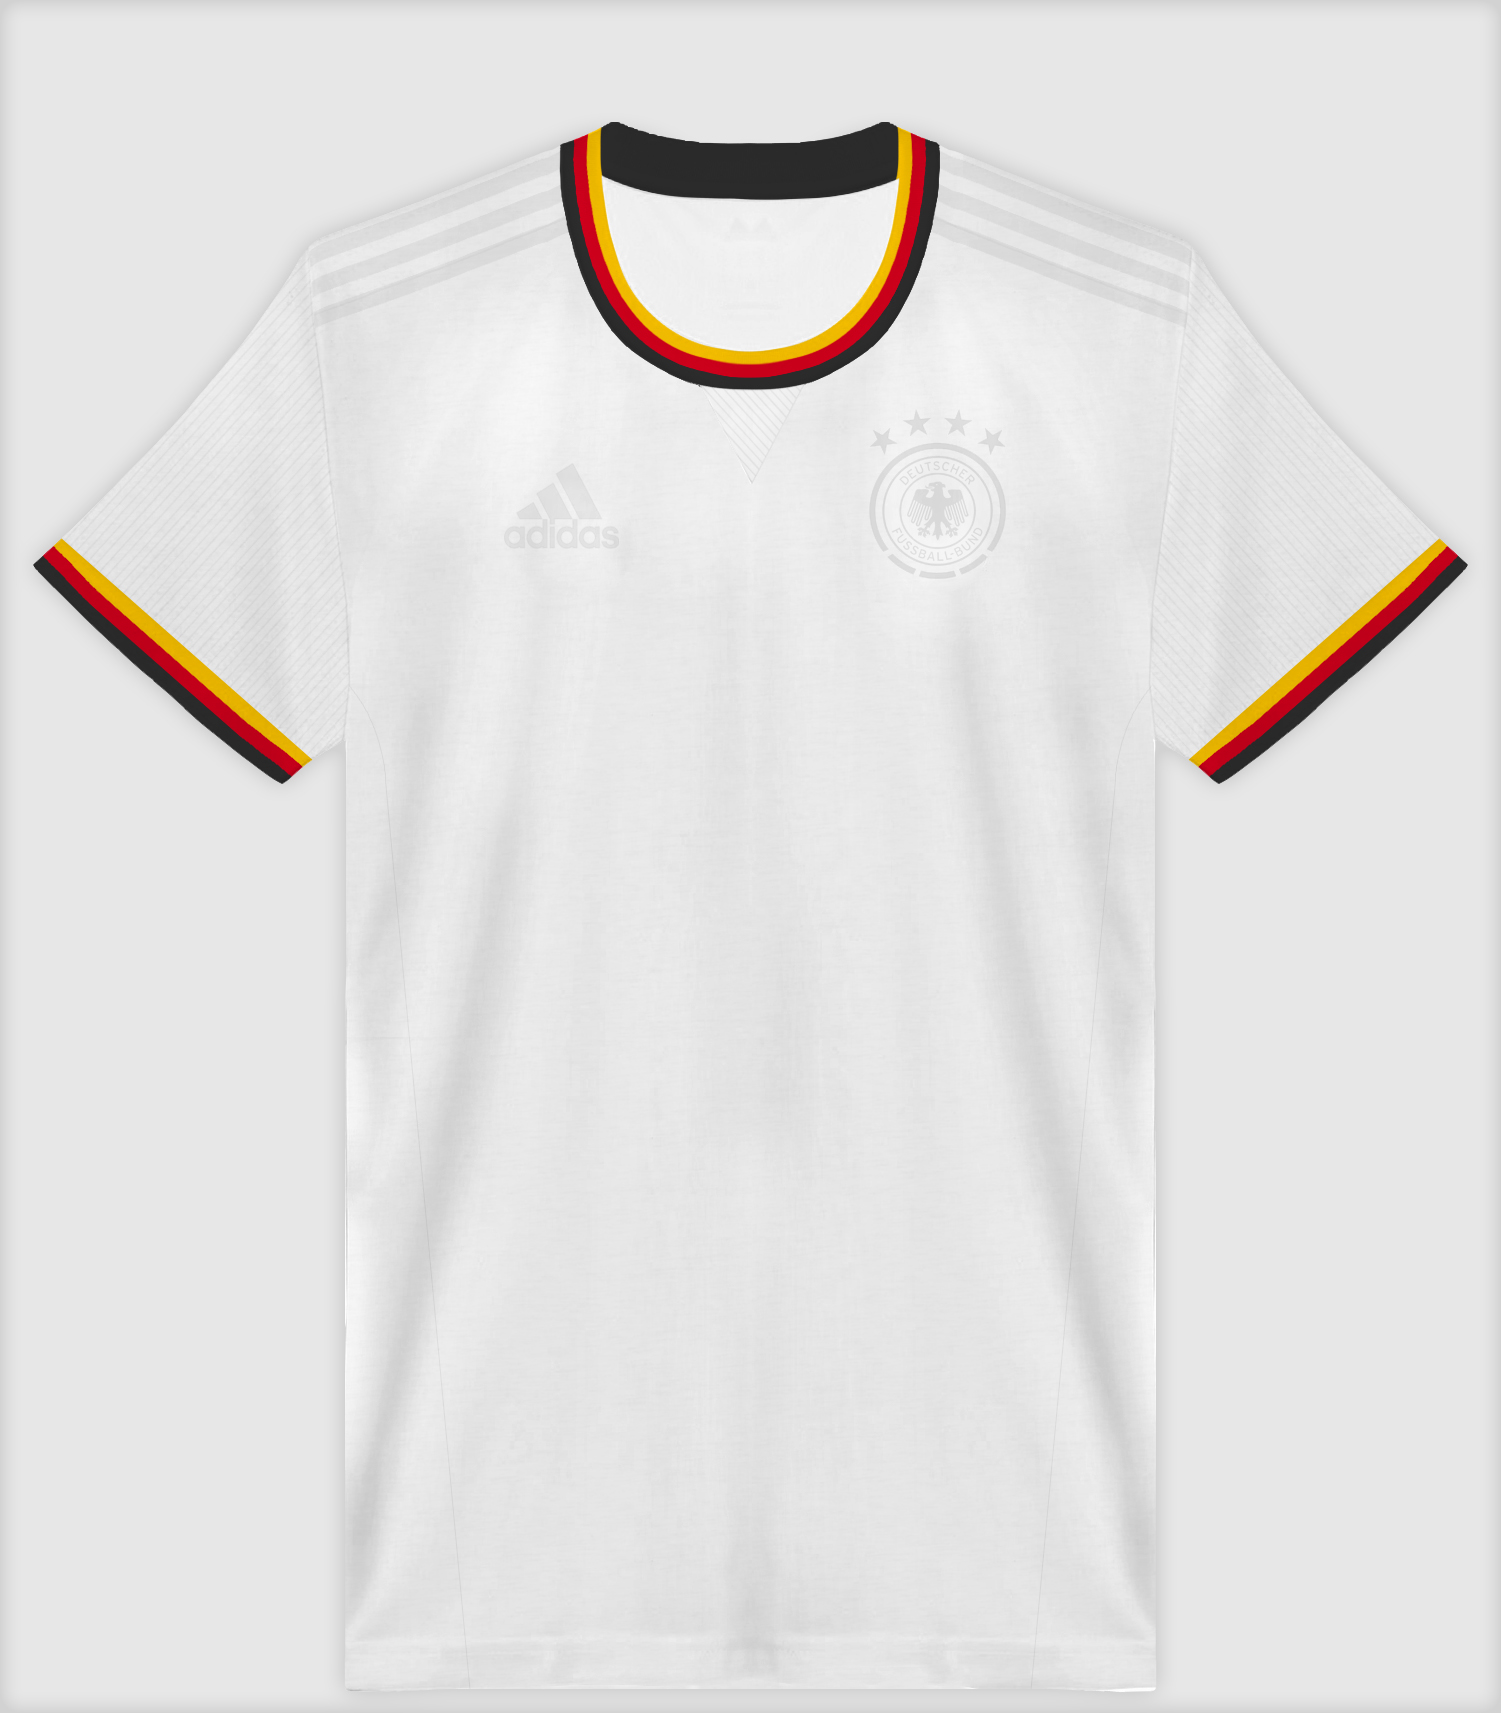 Germany x Adidas